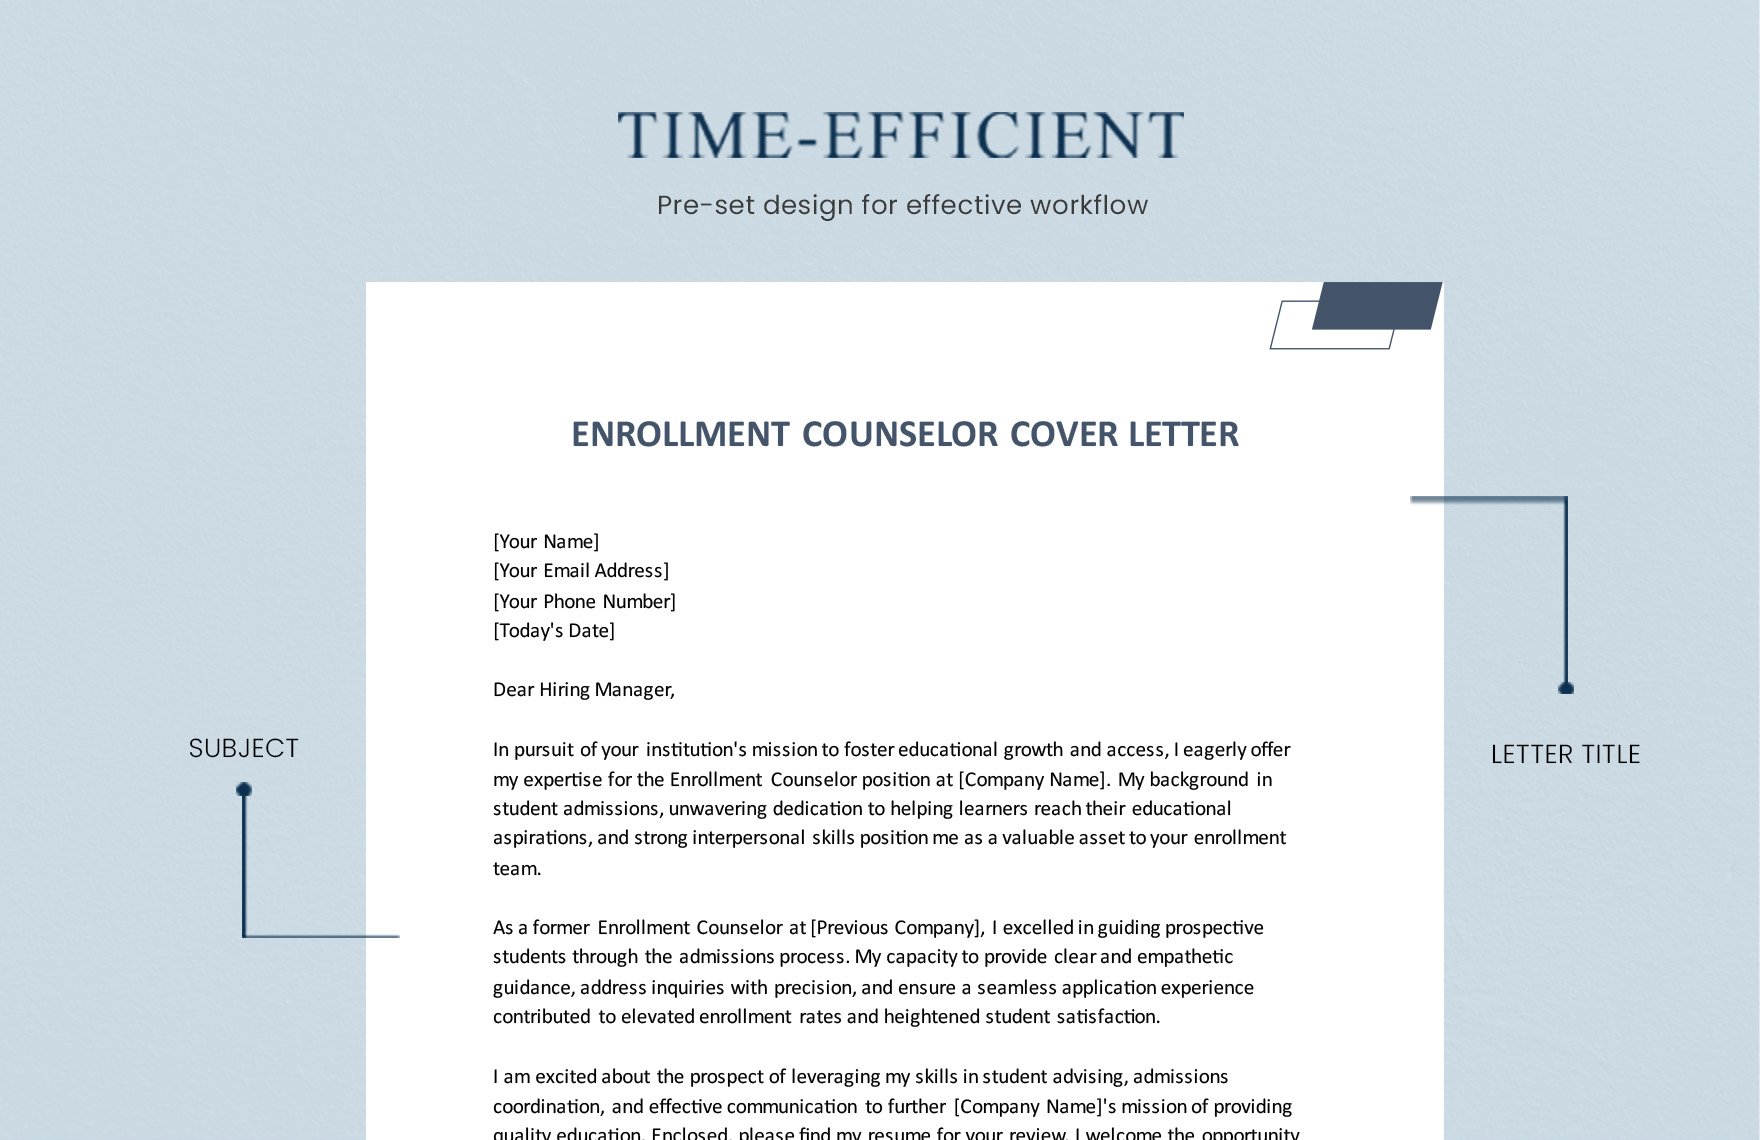 Enrollment Counselor Cover Letter